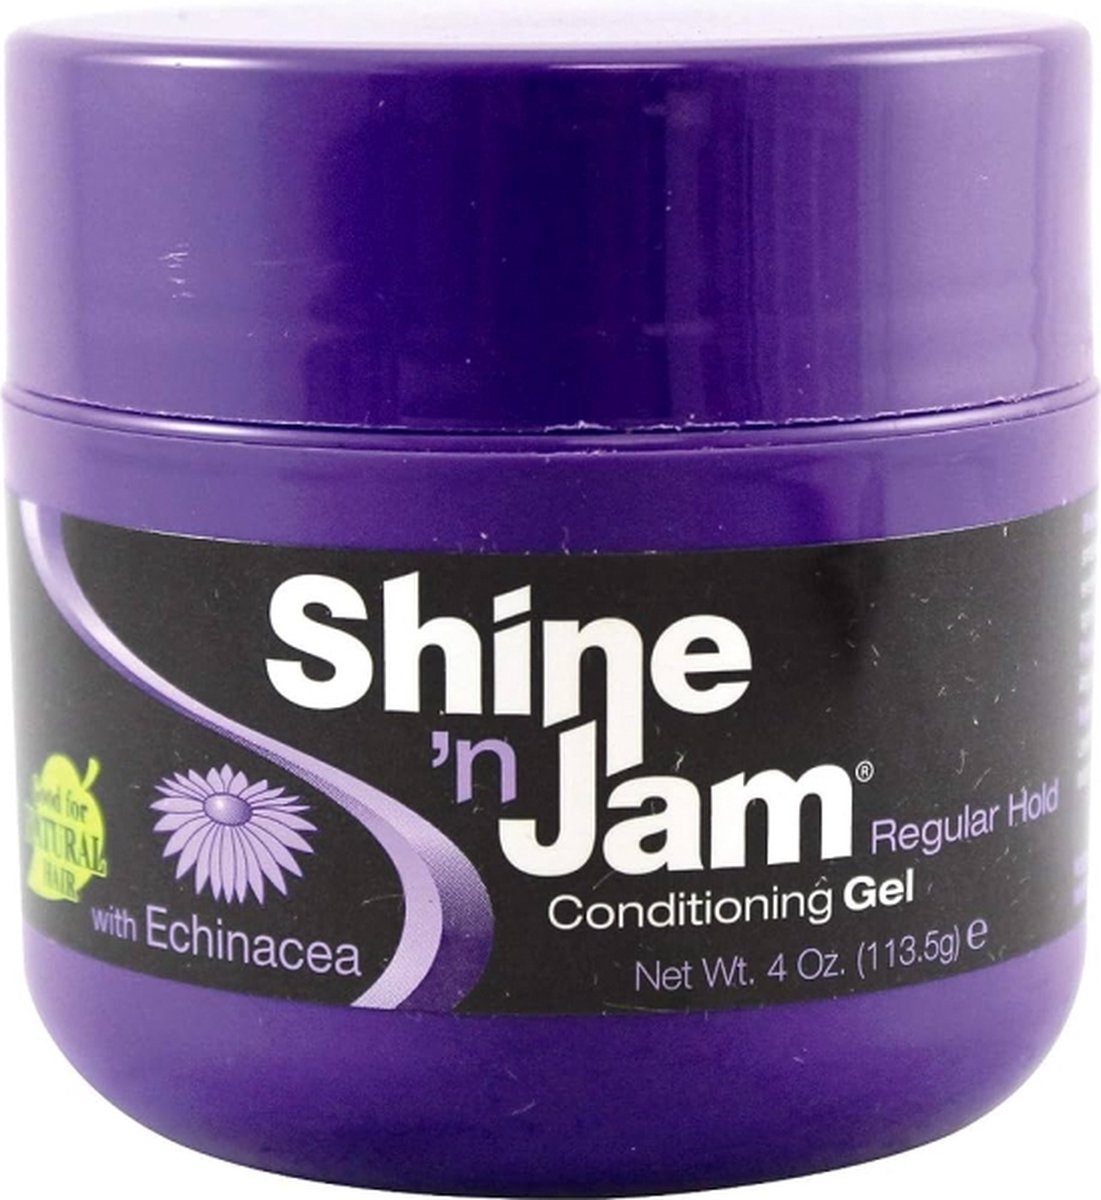 Ampro Shine'n Jam Conditioning Regular Hold Gel 4oz 113g